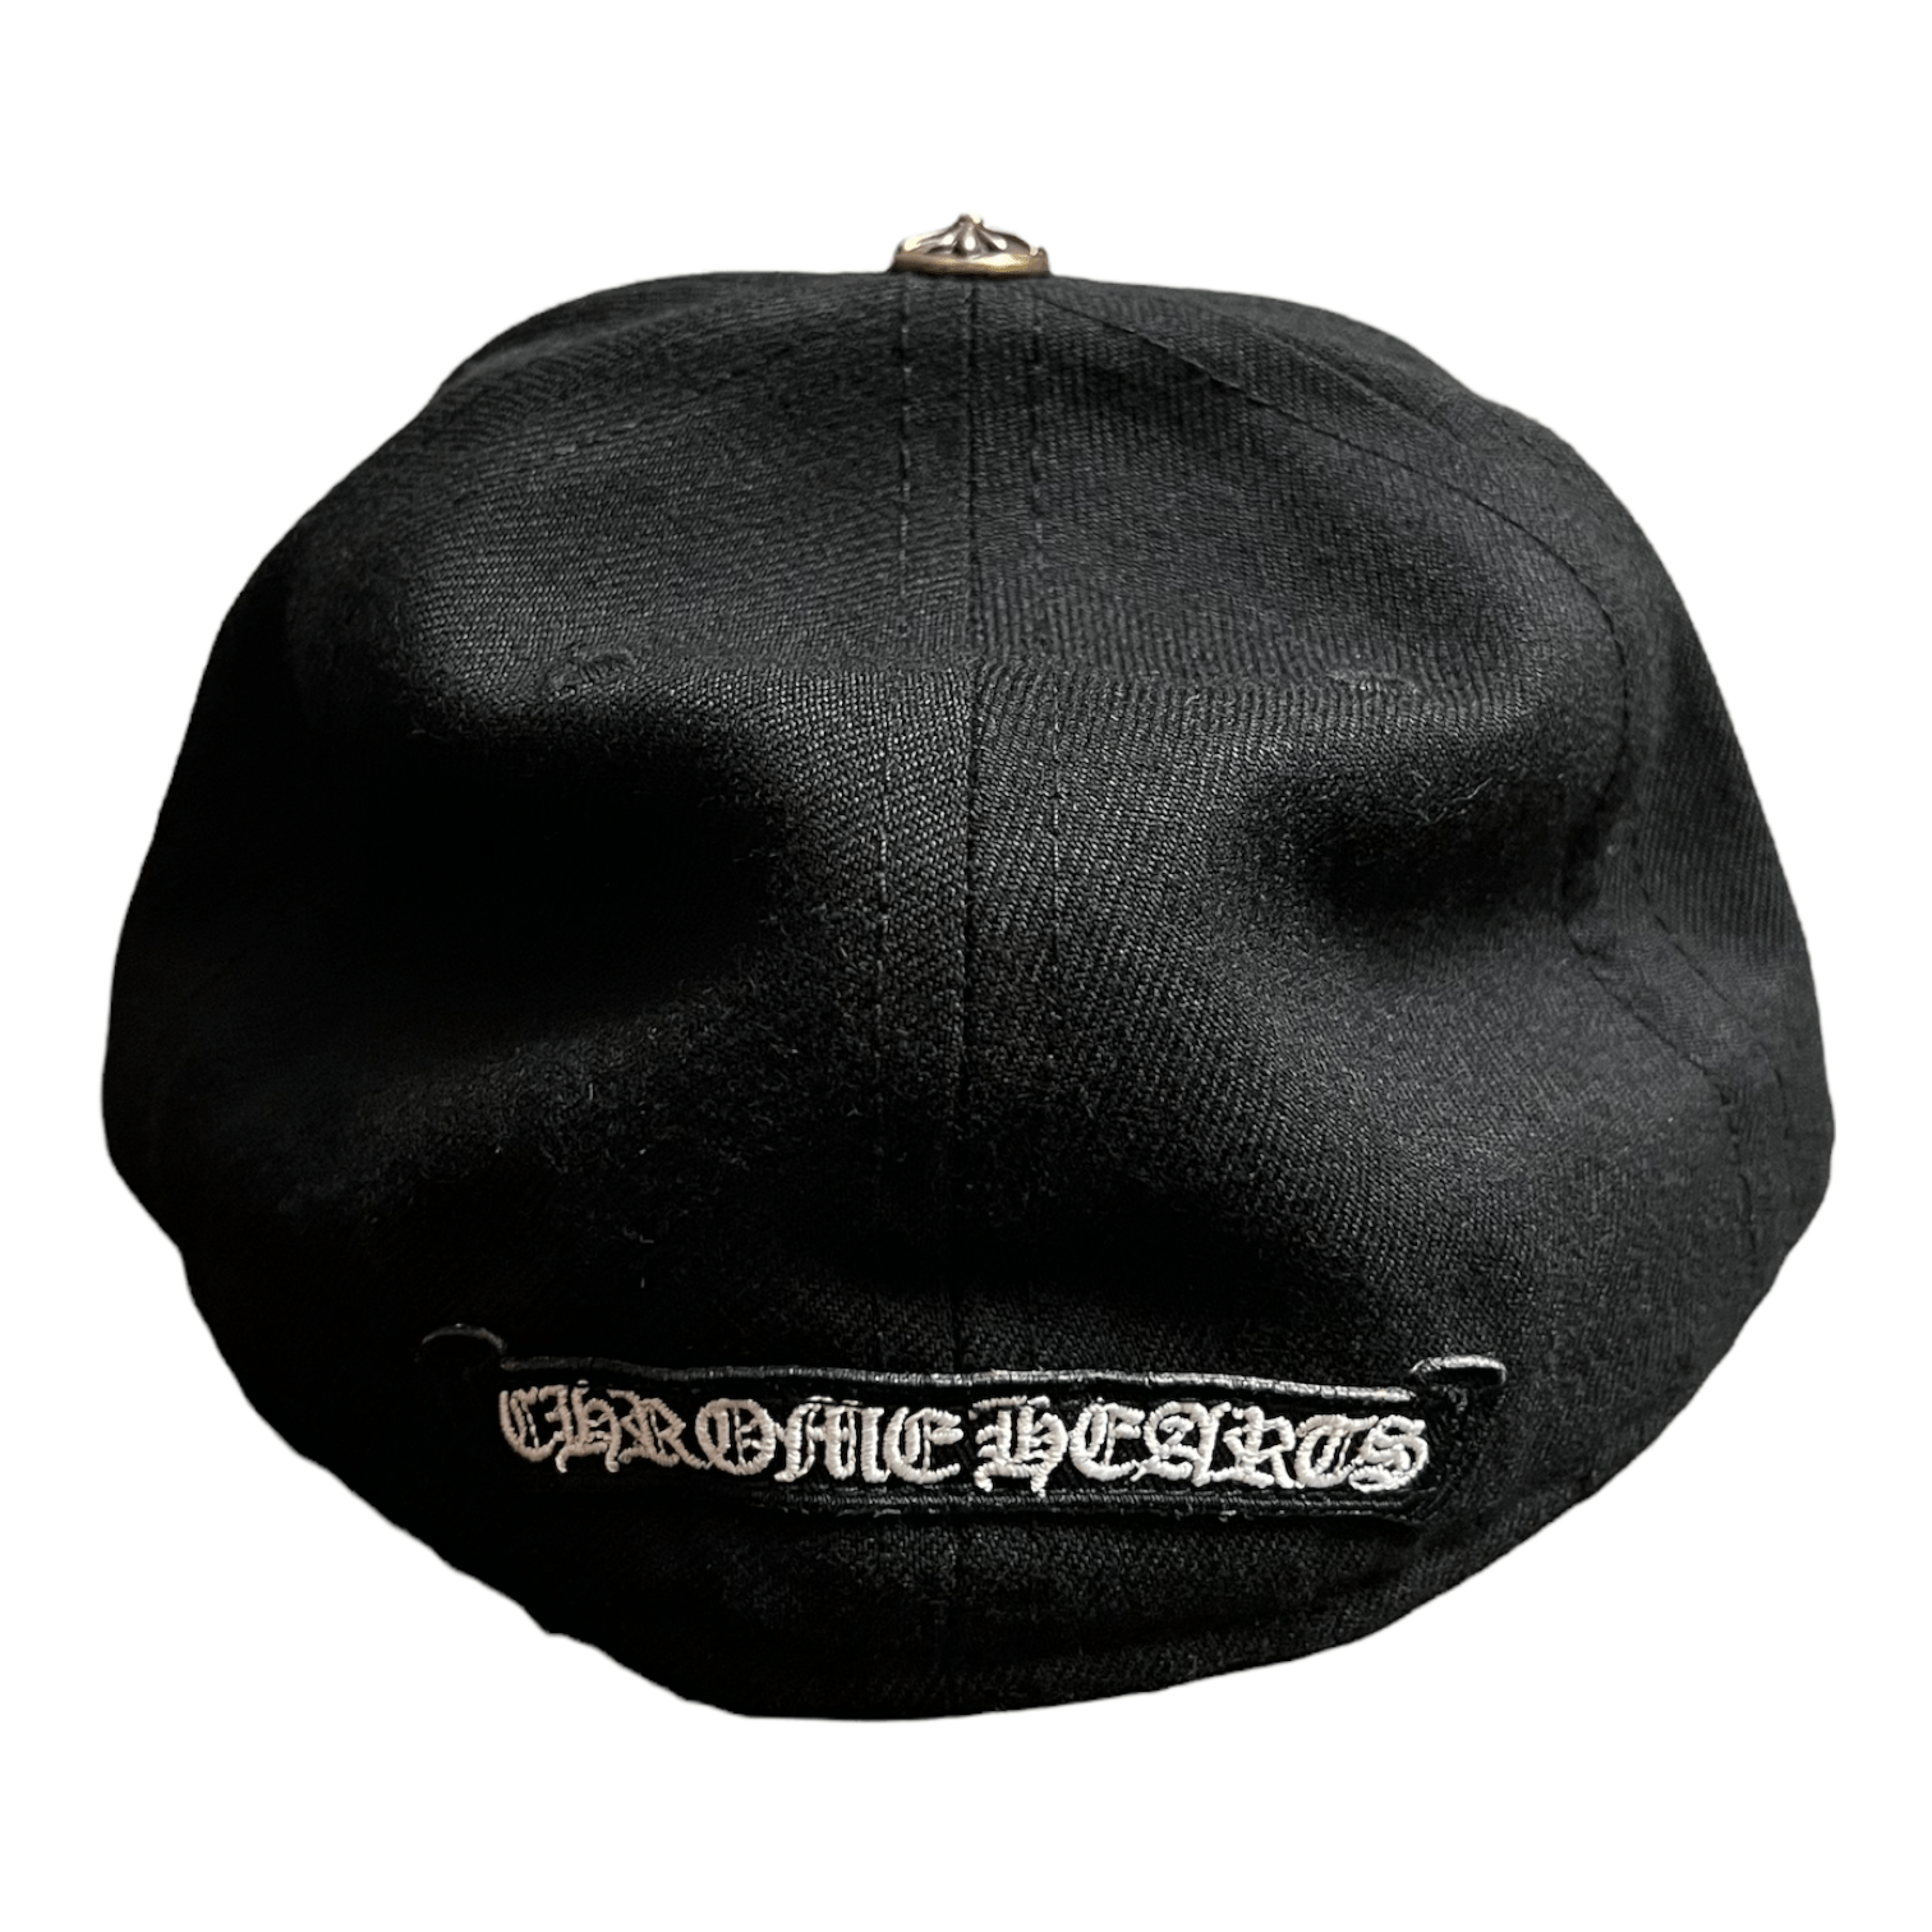 Alternate View 1 of Chrome Hearts Horseshoe Logo Fitted Baseball Cap Black Black